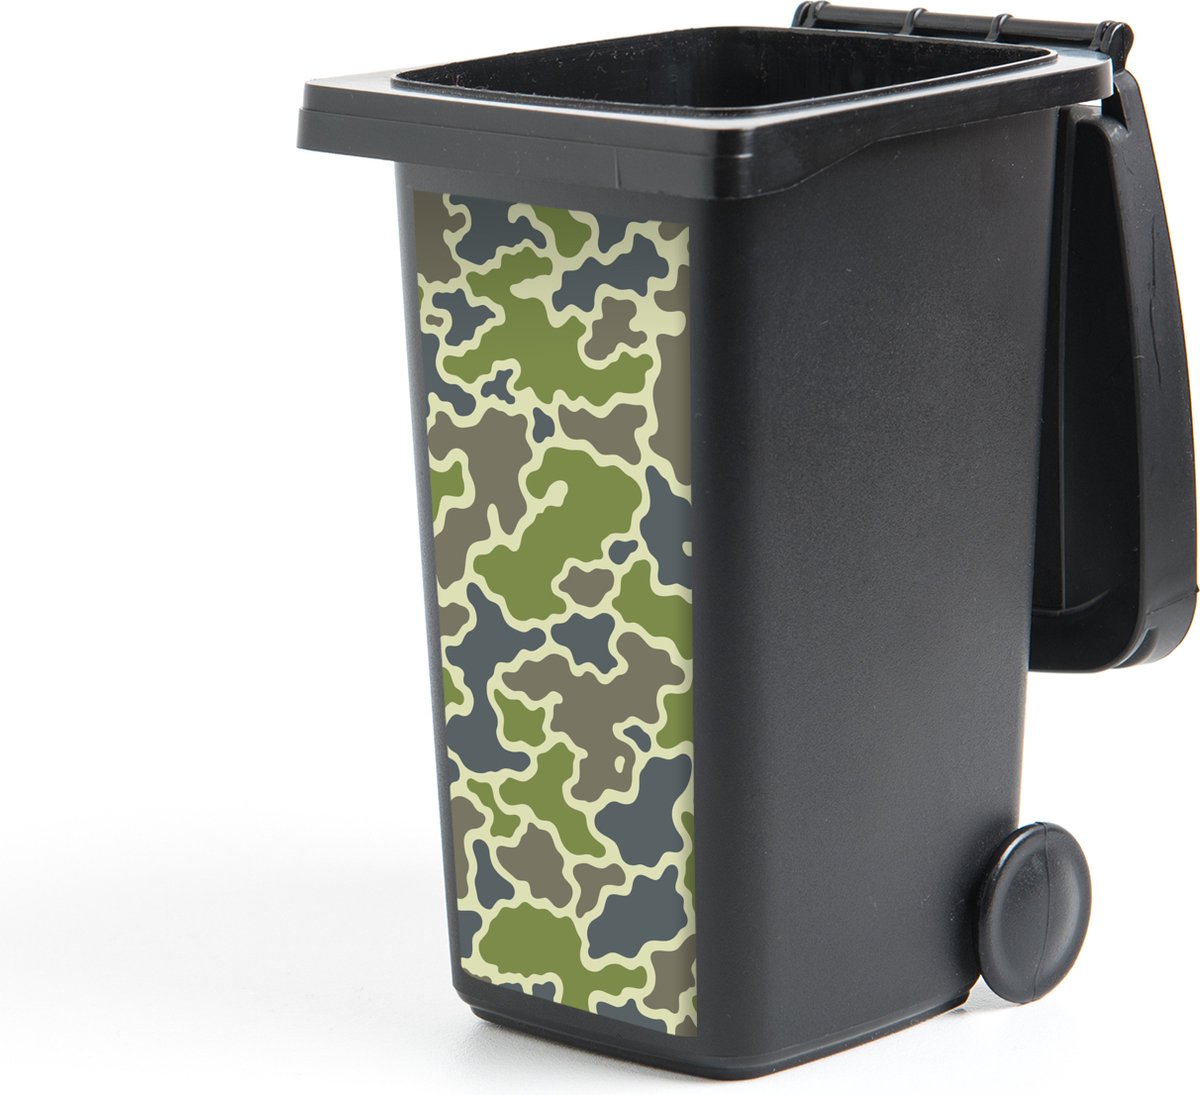 Afbeelding van product StickerSnake  Container sticker Groen camouflage patroon - 38x80 cm - Kliko sticker